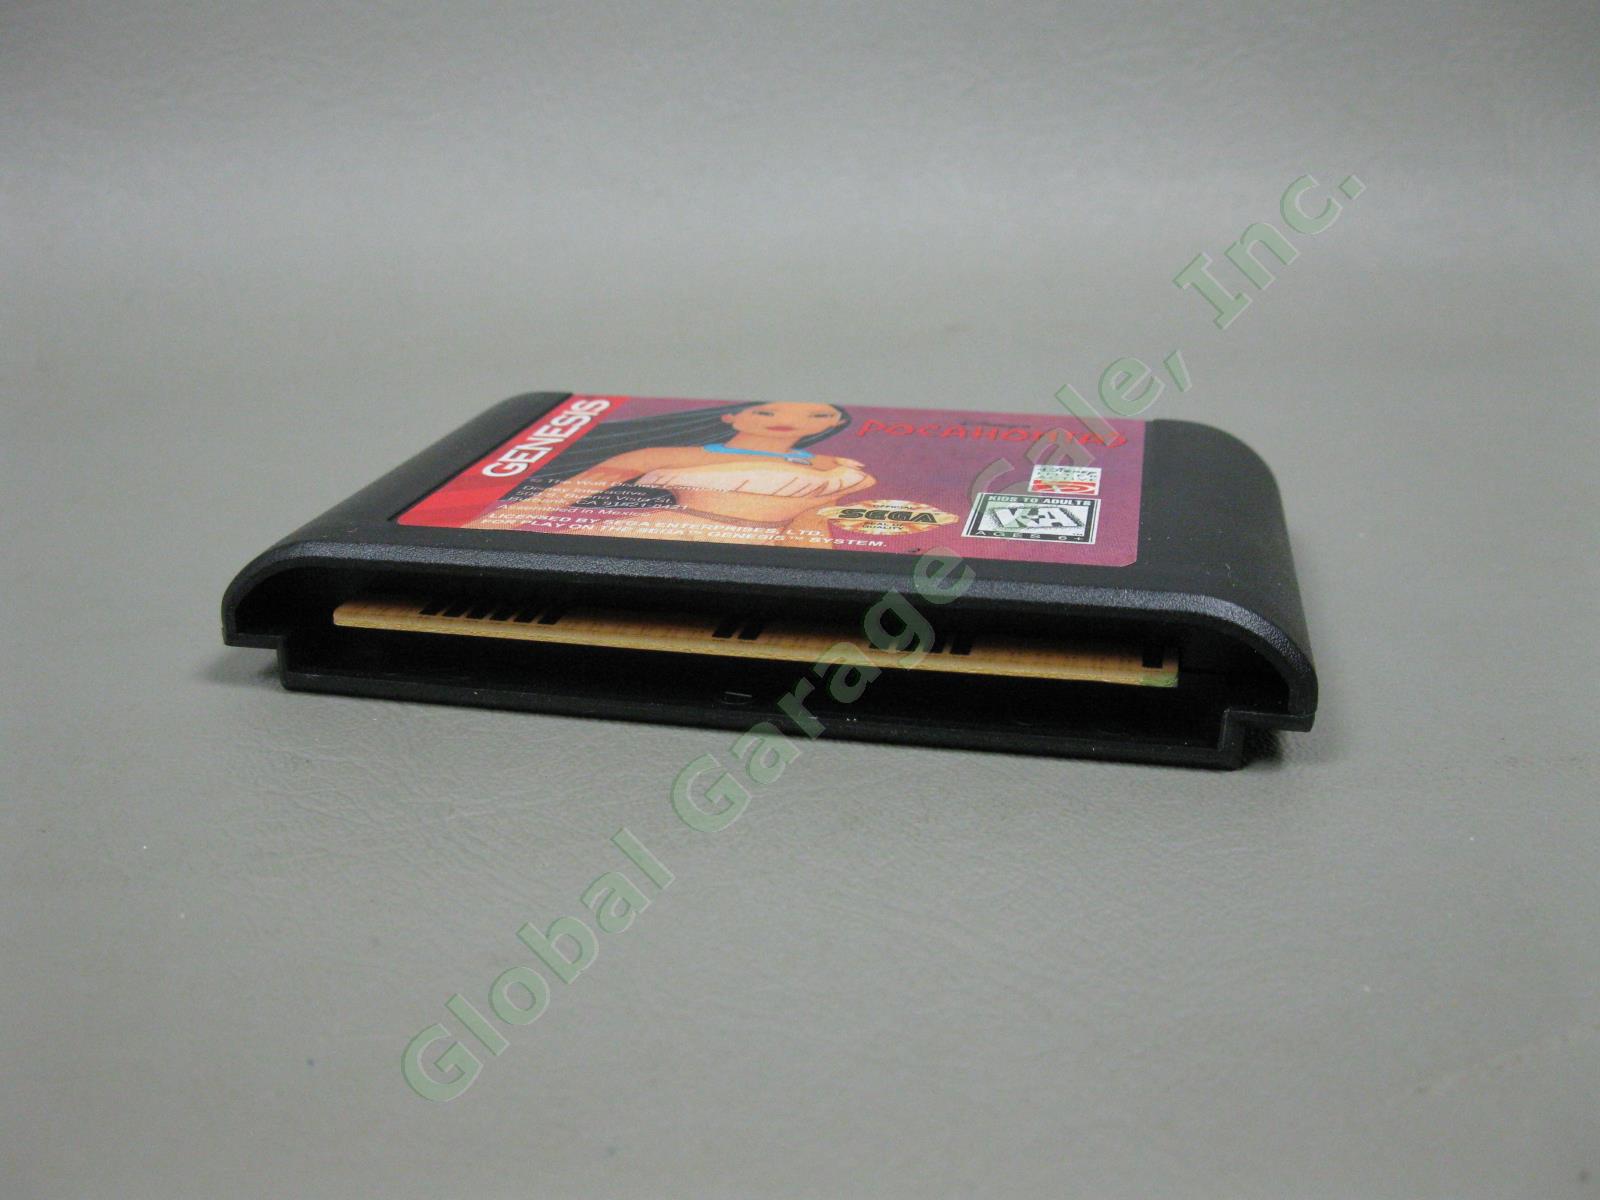 Sega Genesis Pocahontas Video Game Complete In Case w/ Cartridge Insert & Poster 10